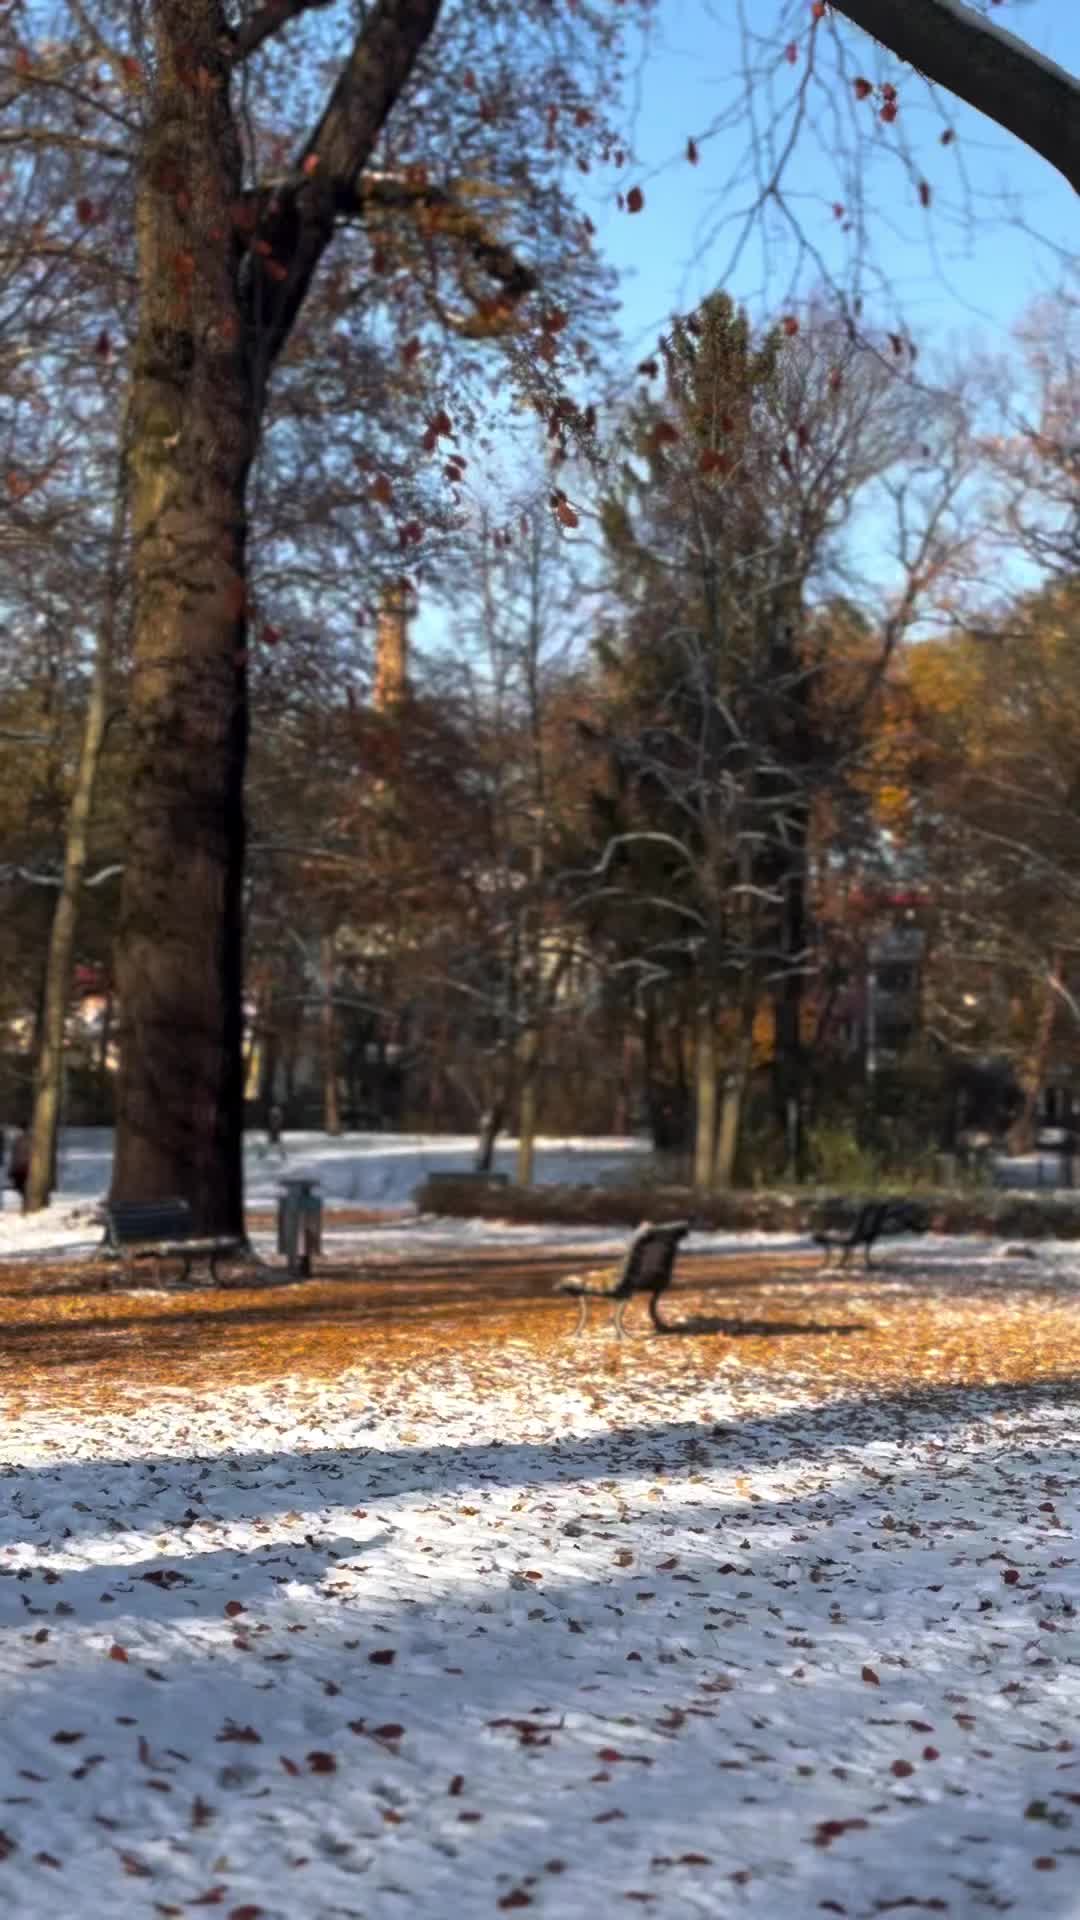 Snowy Serenity at Bürgerpark Pankow, Berlin